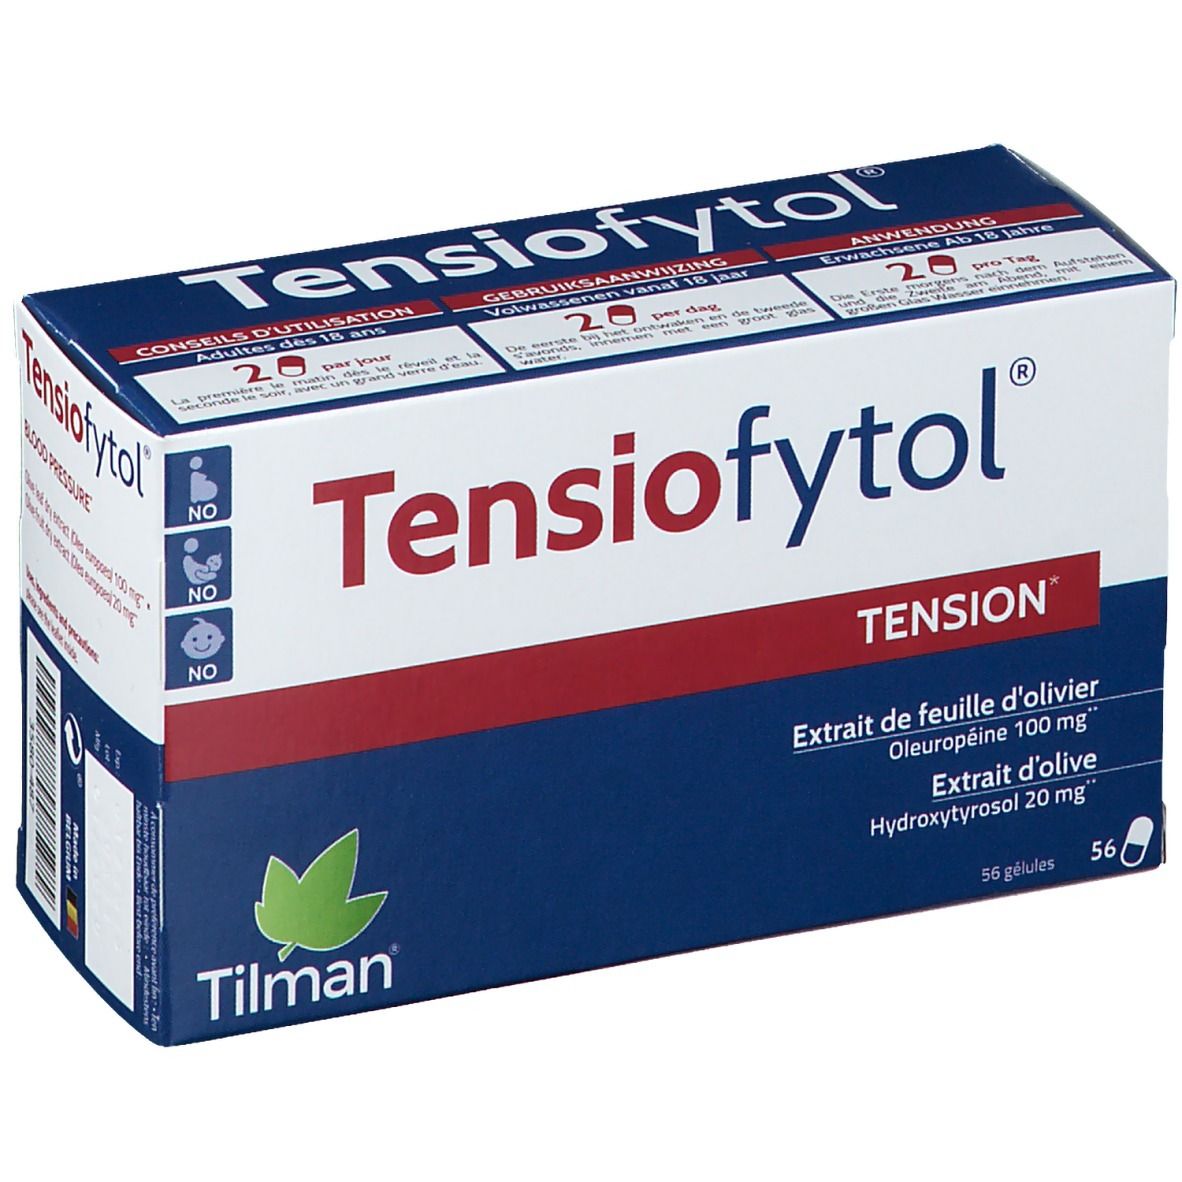 Tensiofytol® Tension®